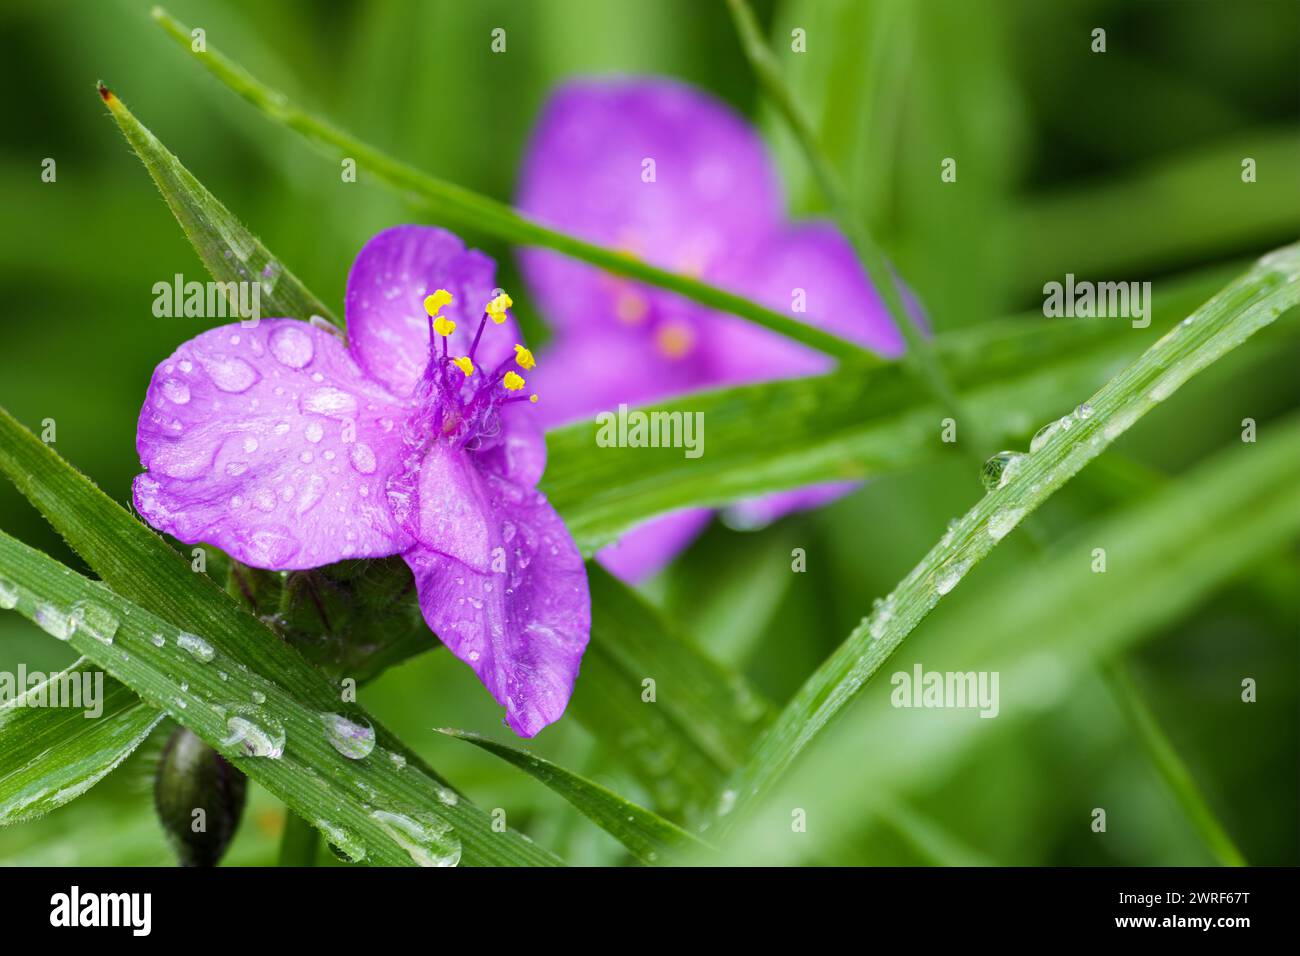 Violet spiderwort, Tradescantia virginiana close up. Blurred background. Stock Photo